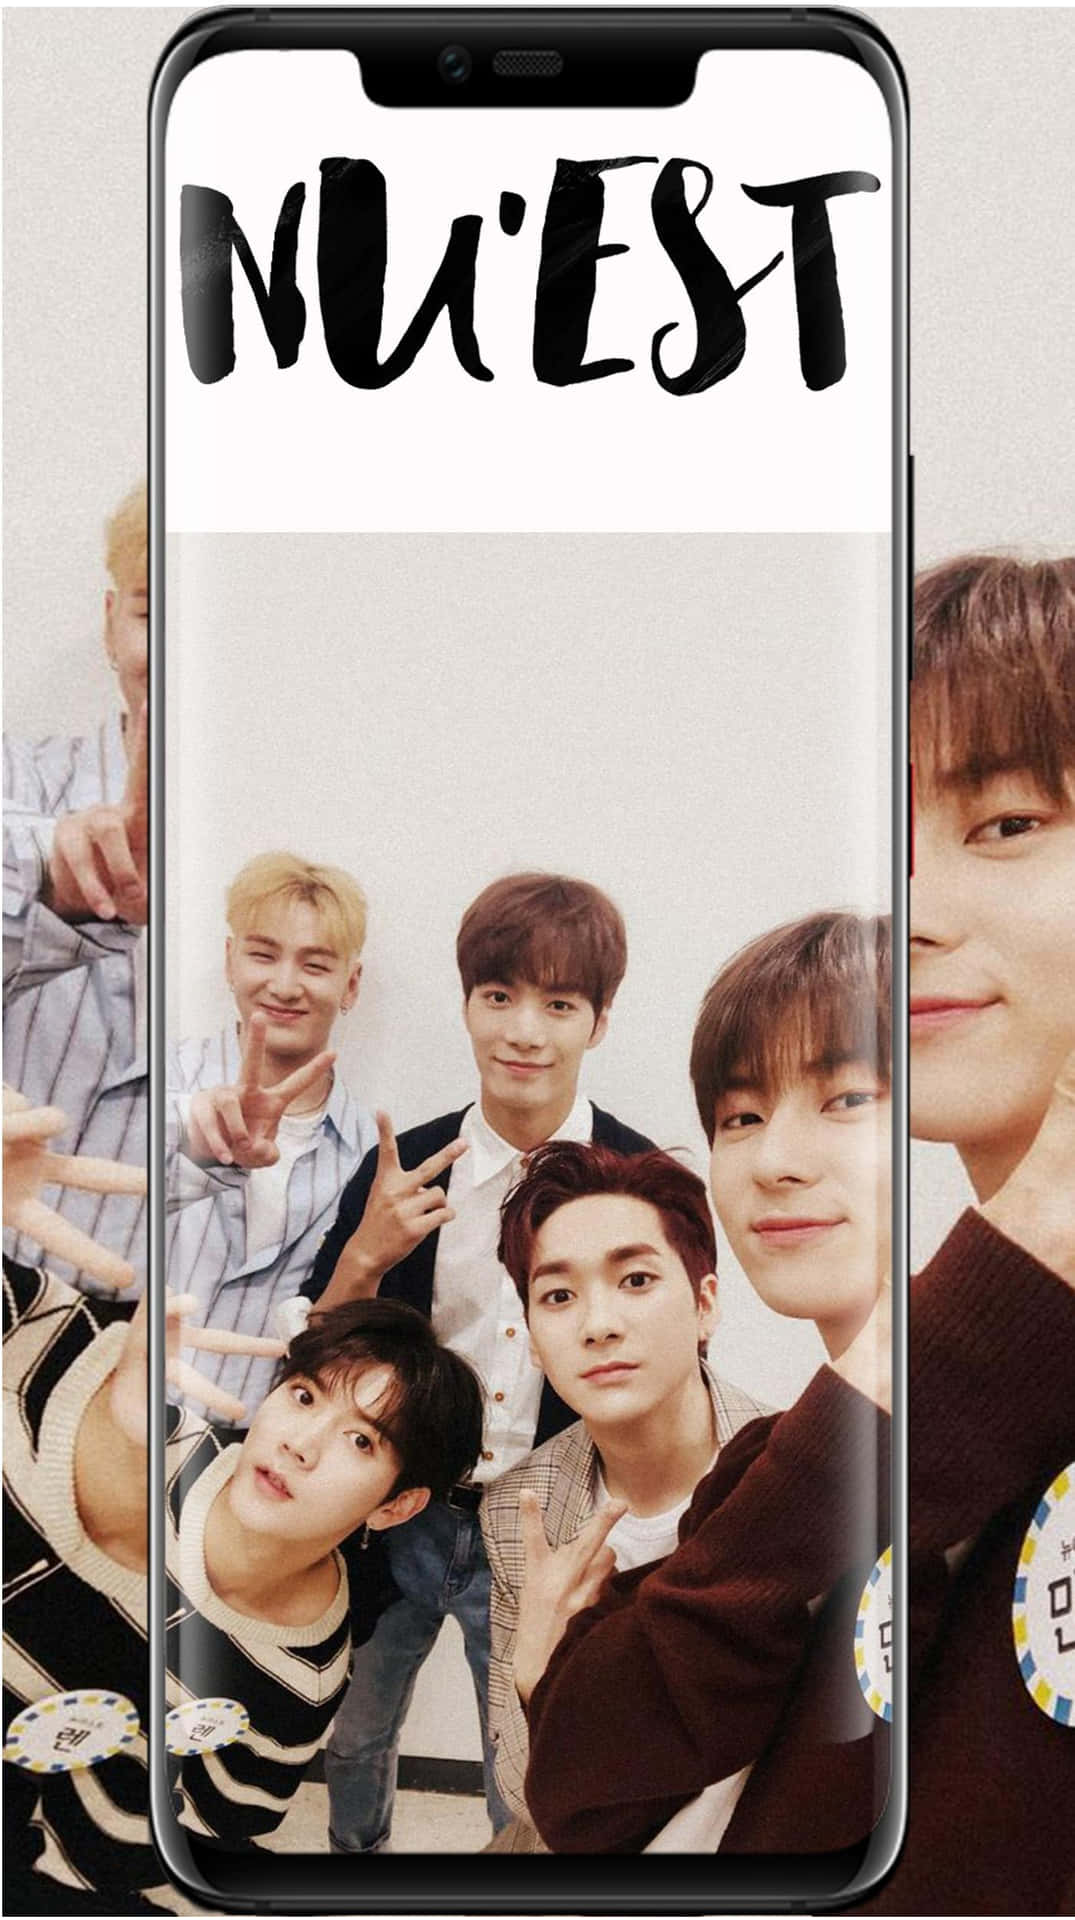 Nuestkpop Boy Group Handy (or Nuest Kpop Boy Group Smartphone) Wallpaper